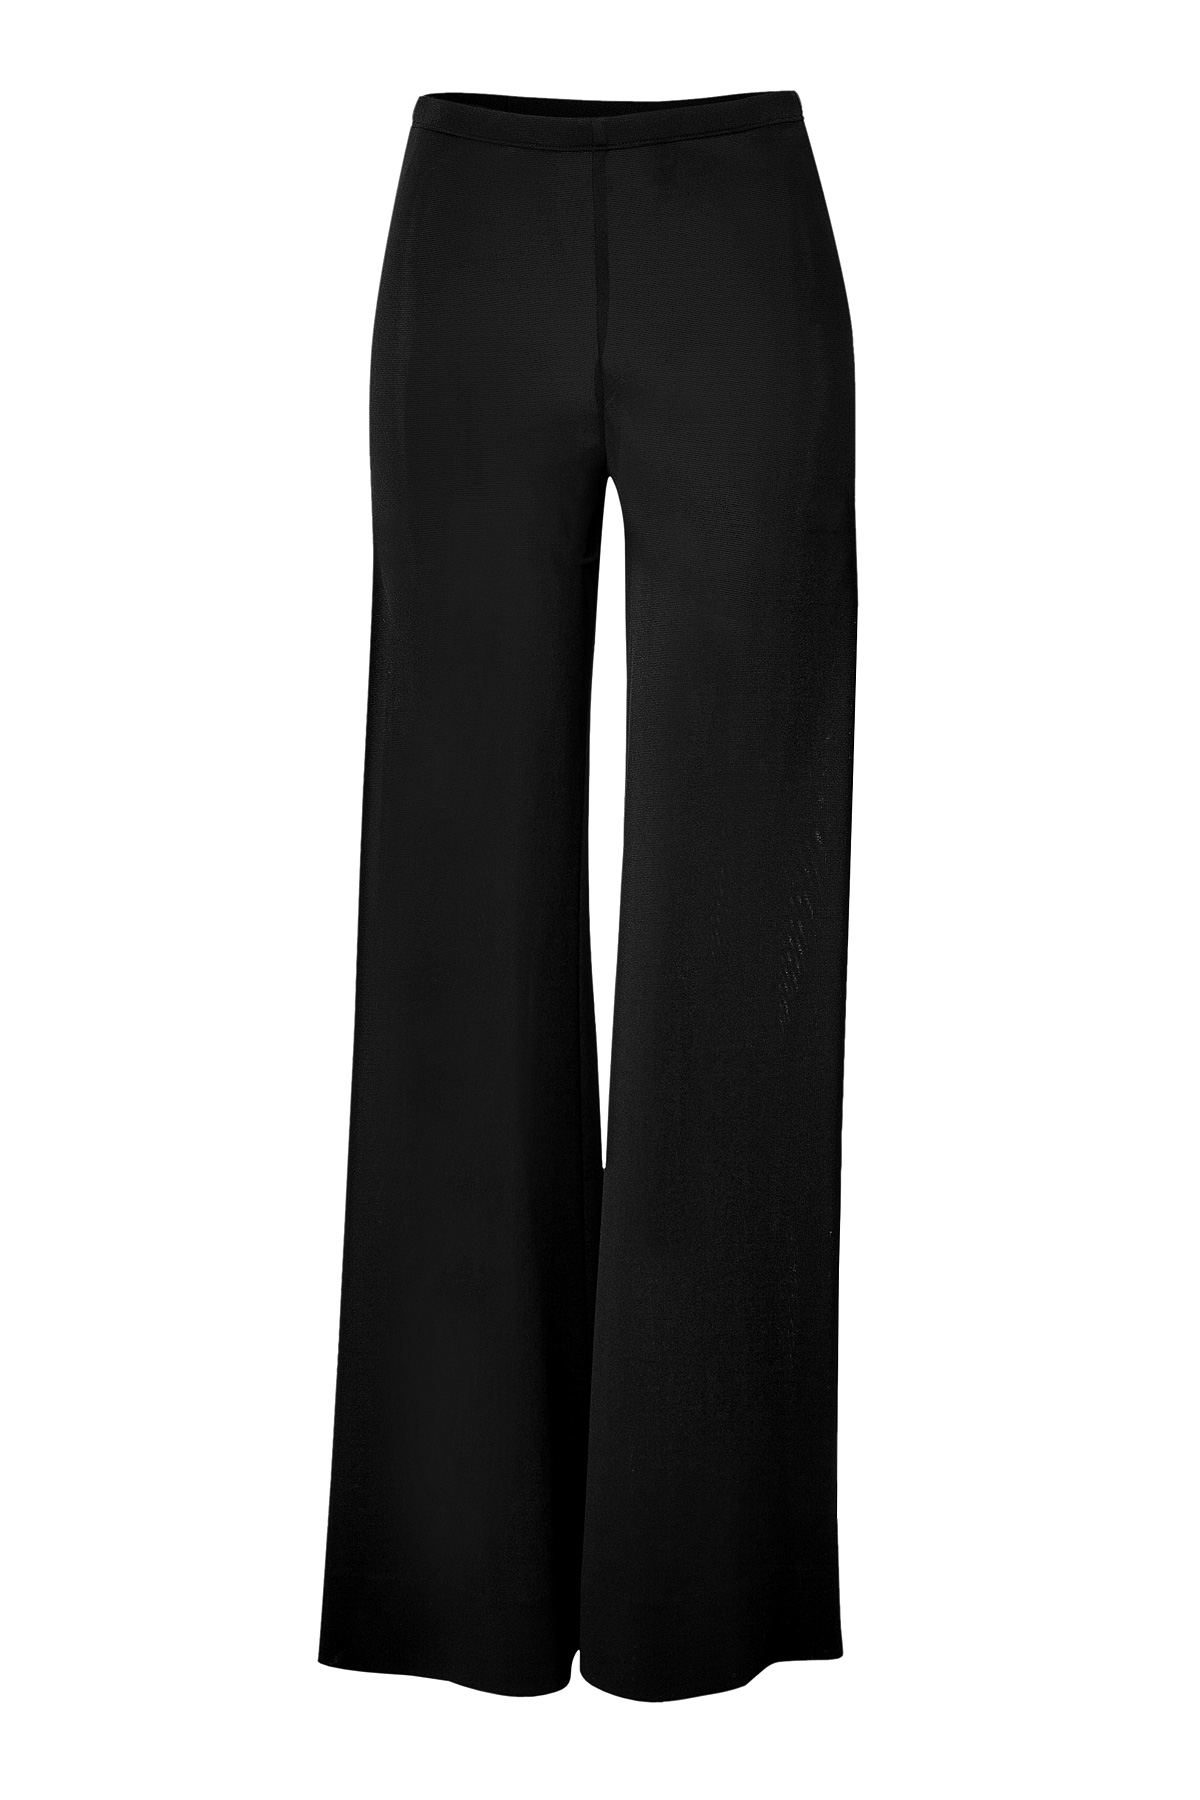 Donna karan Wide-leg Stretch-silk Pants in Black | Lyst